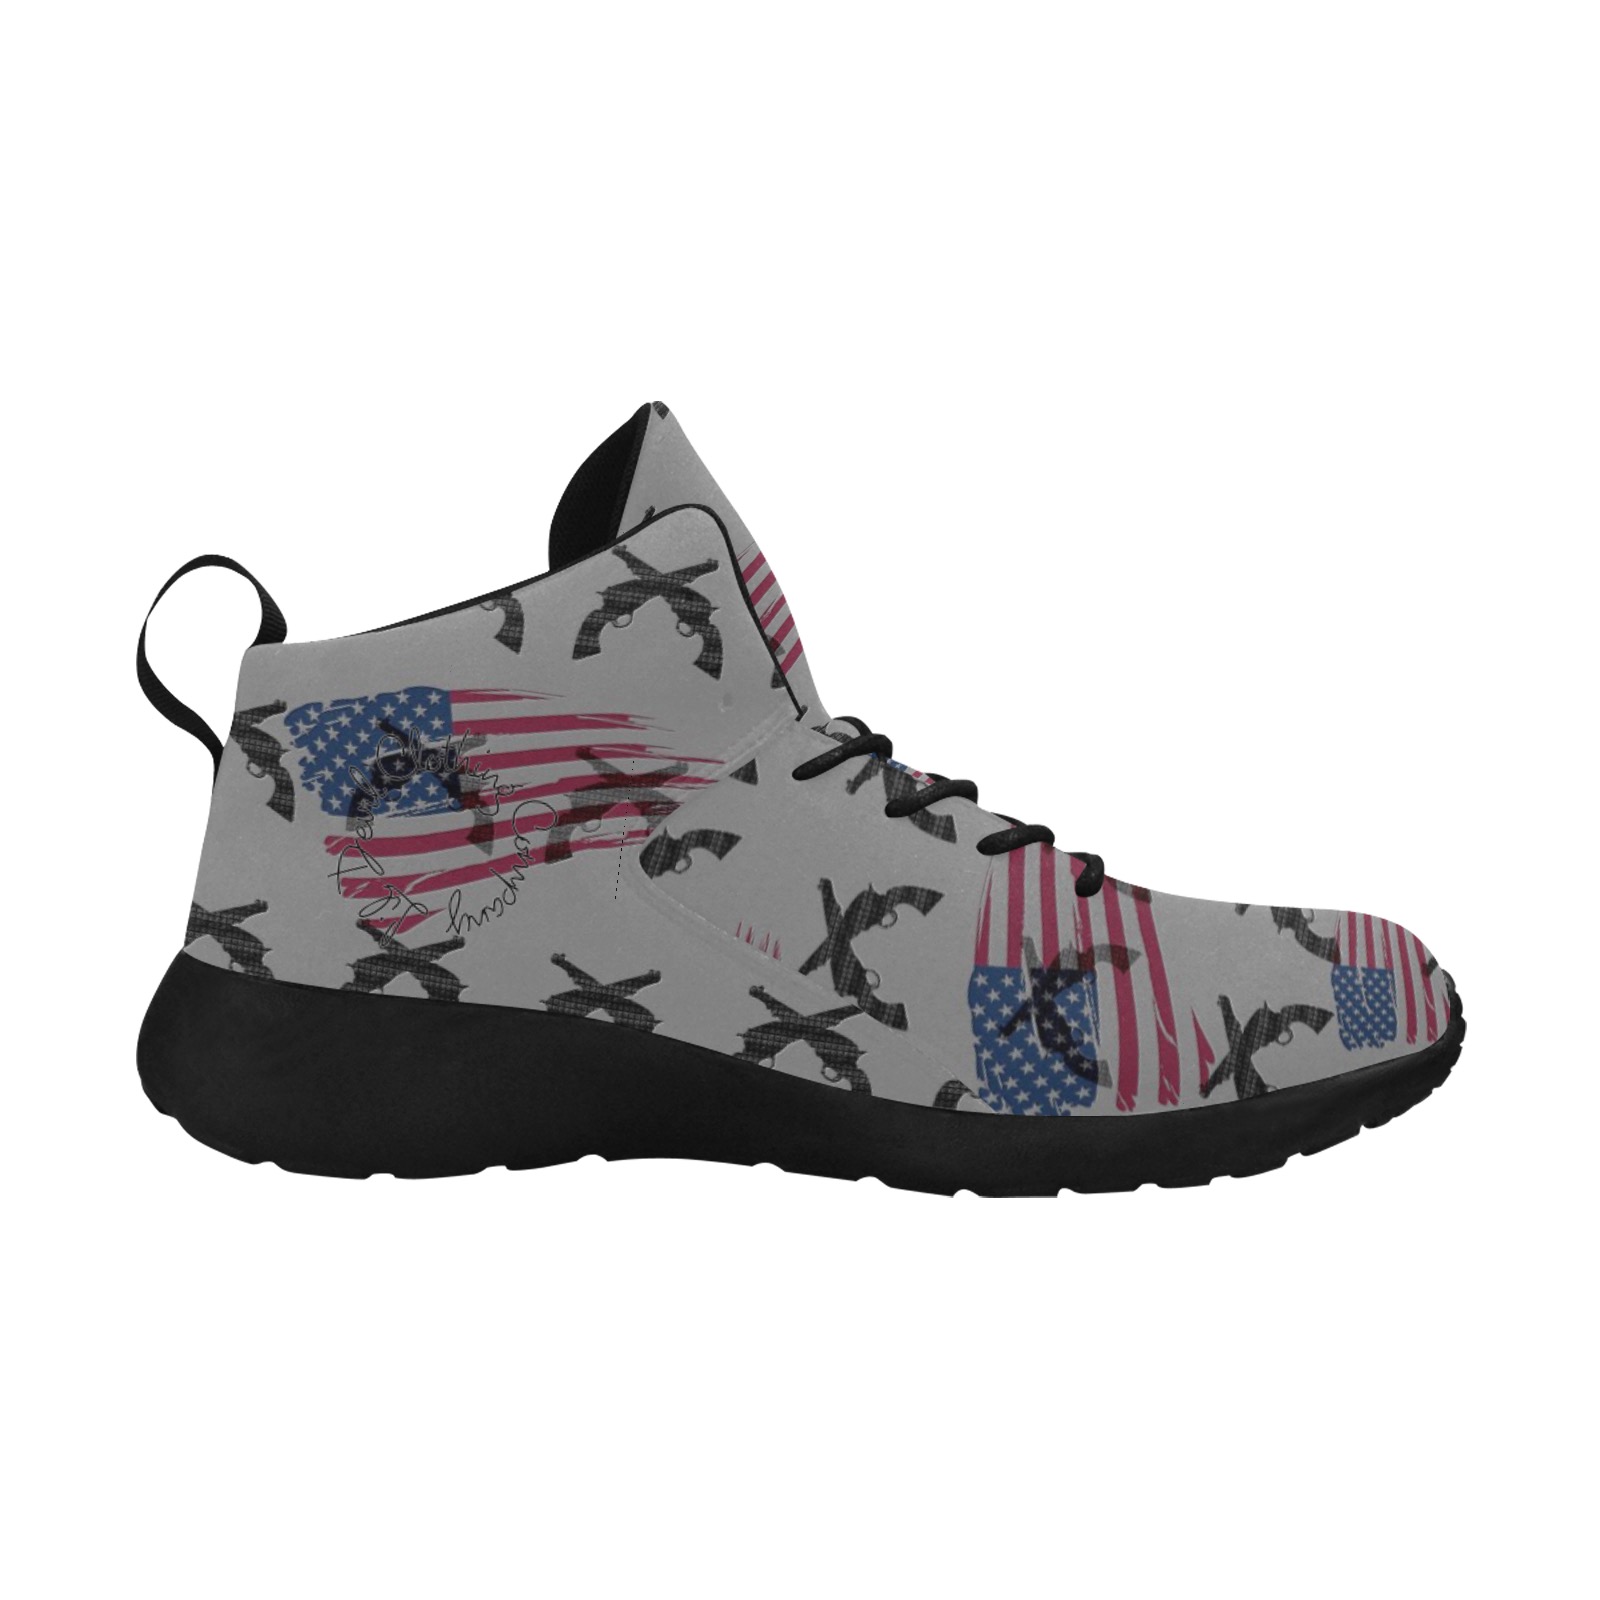 American Theme print 33A272CC-E0B9-4F3E-8D91-1D10085057D4 Men's Chukka Training Shoes (Model 57502)